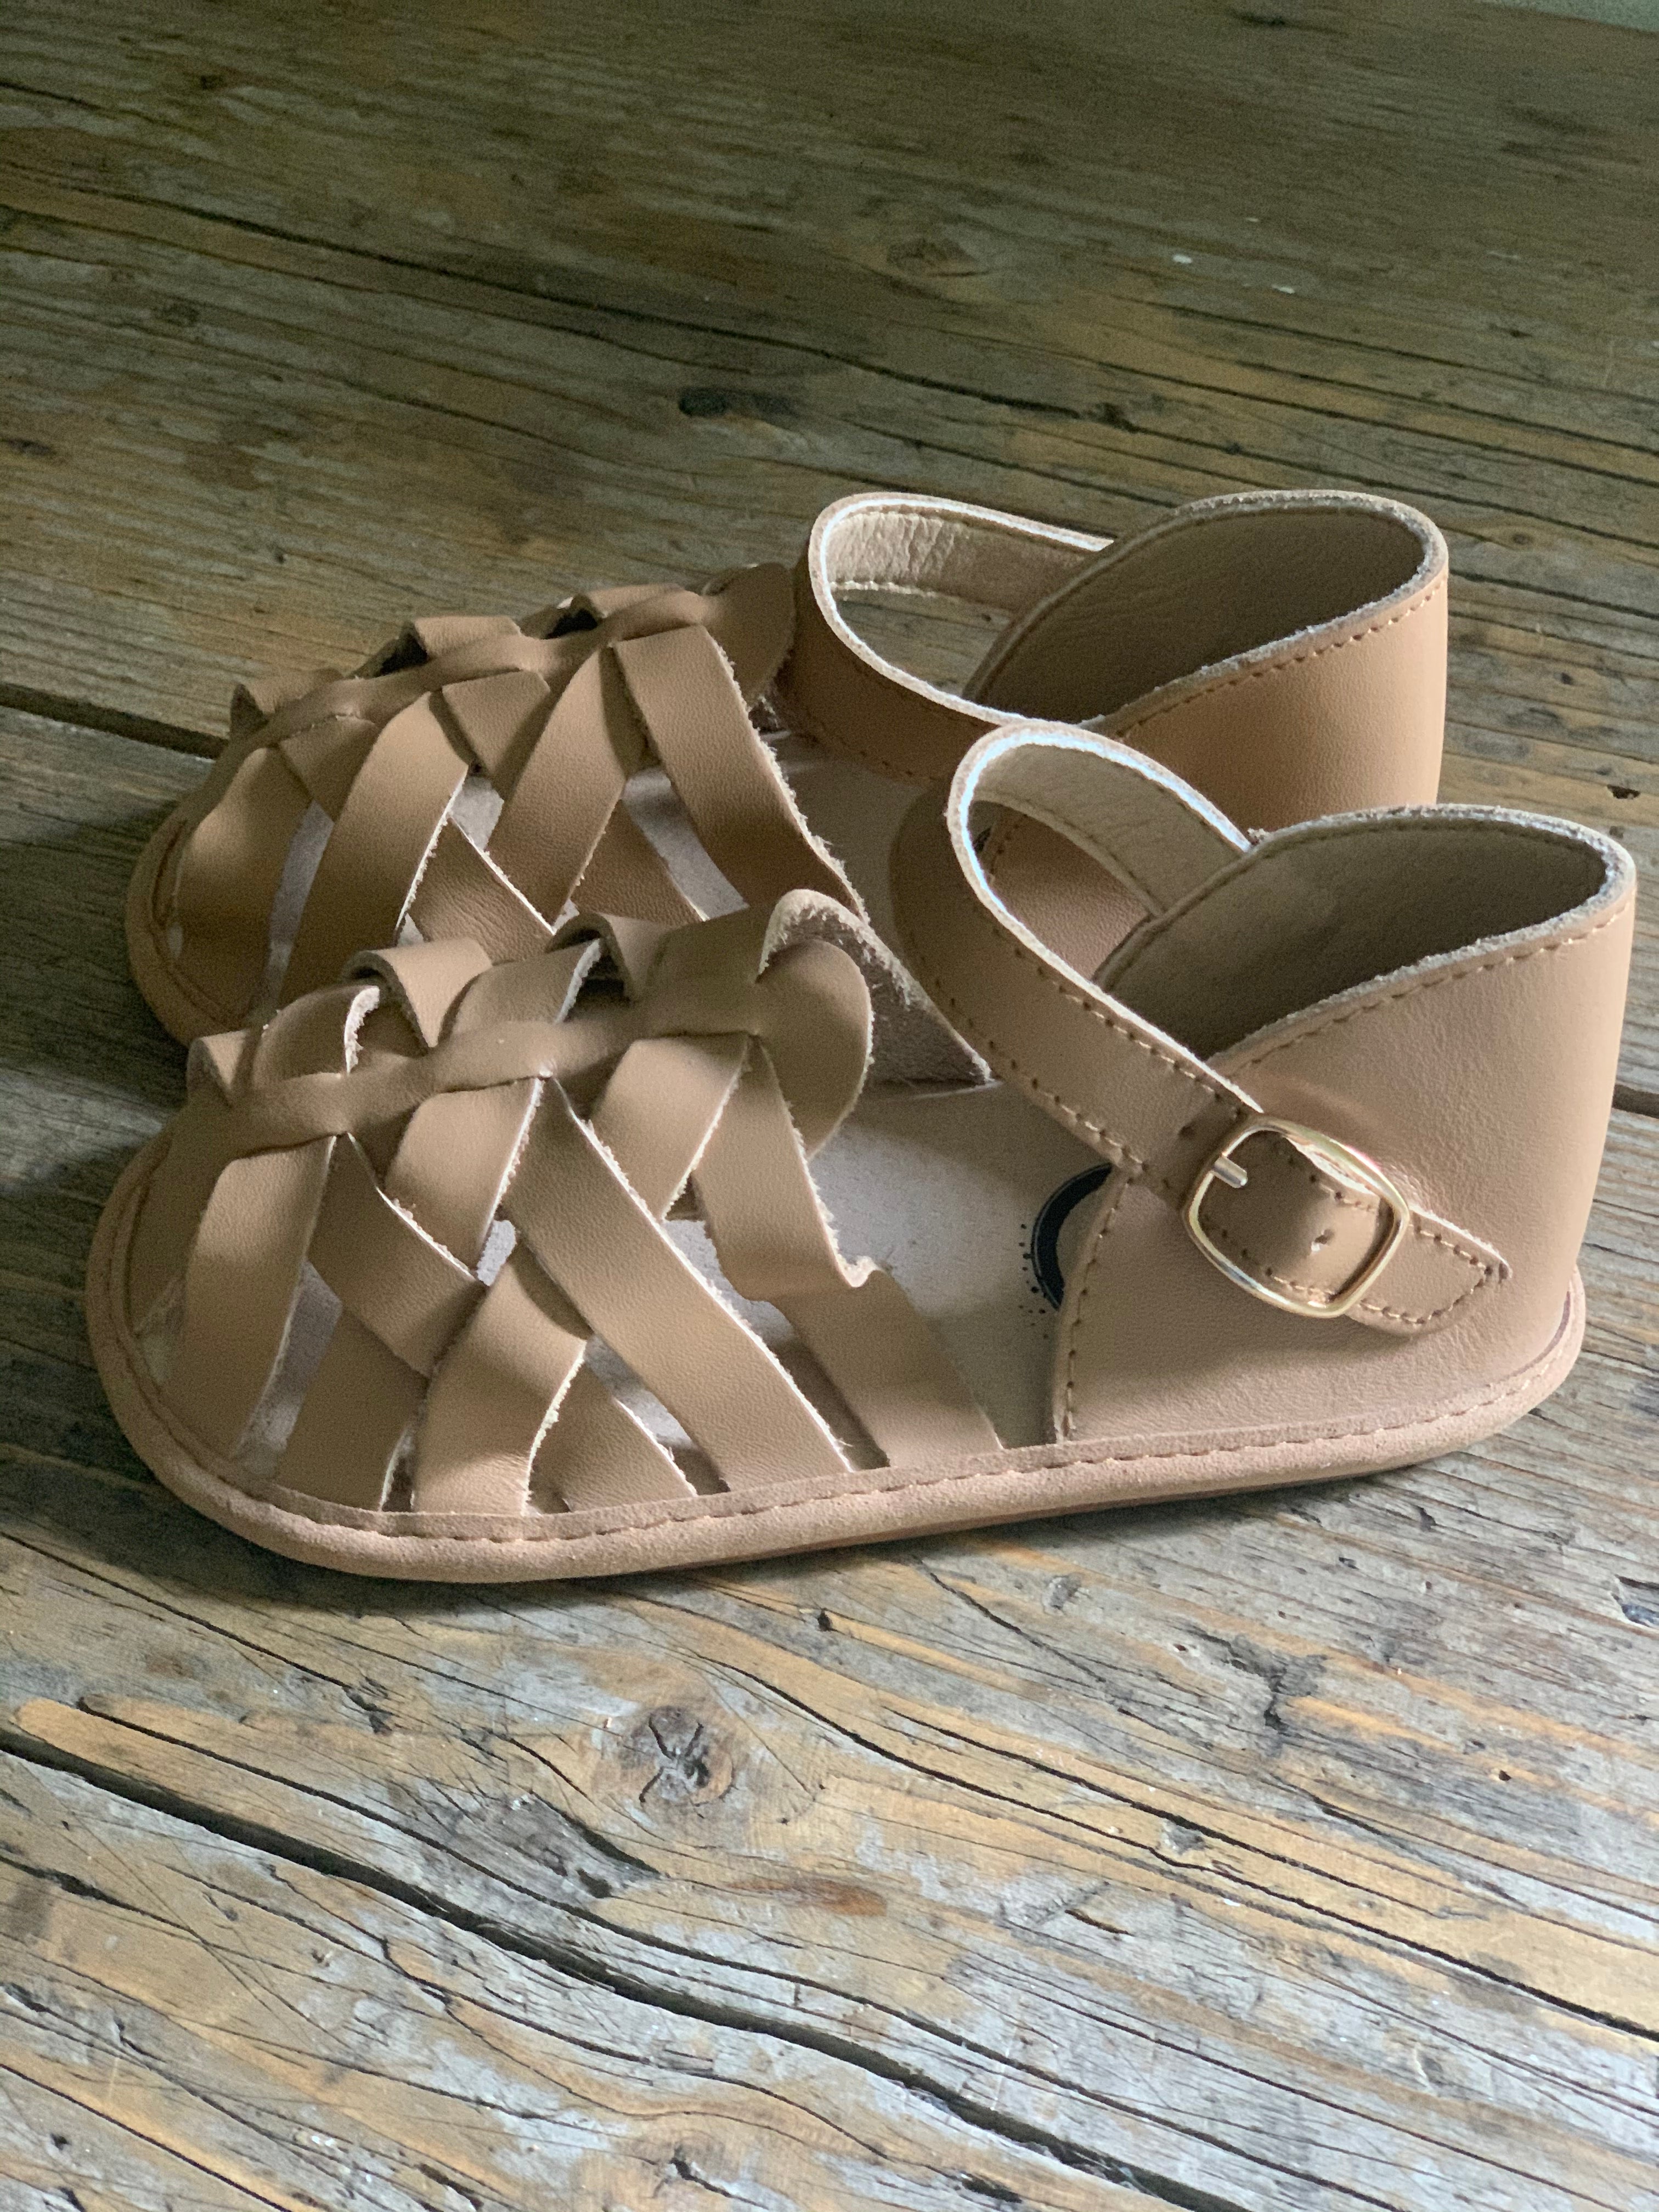 sandal moccasin - tan leather